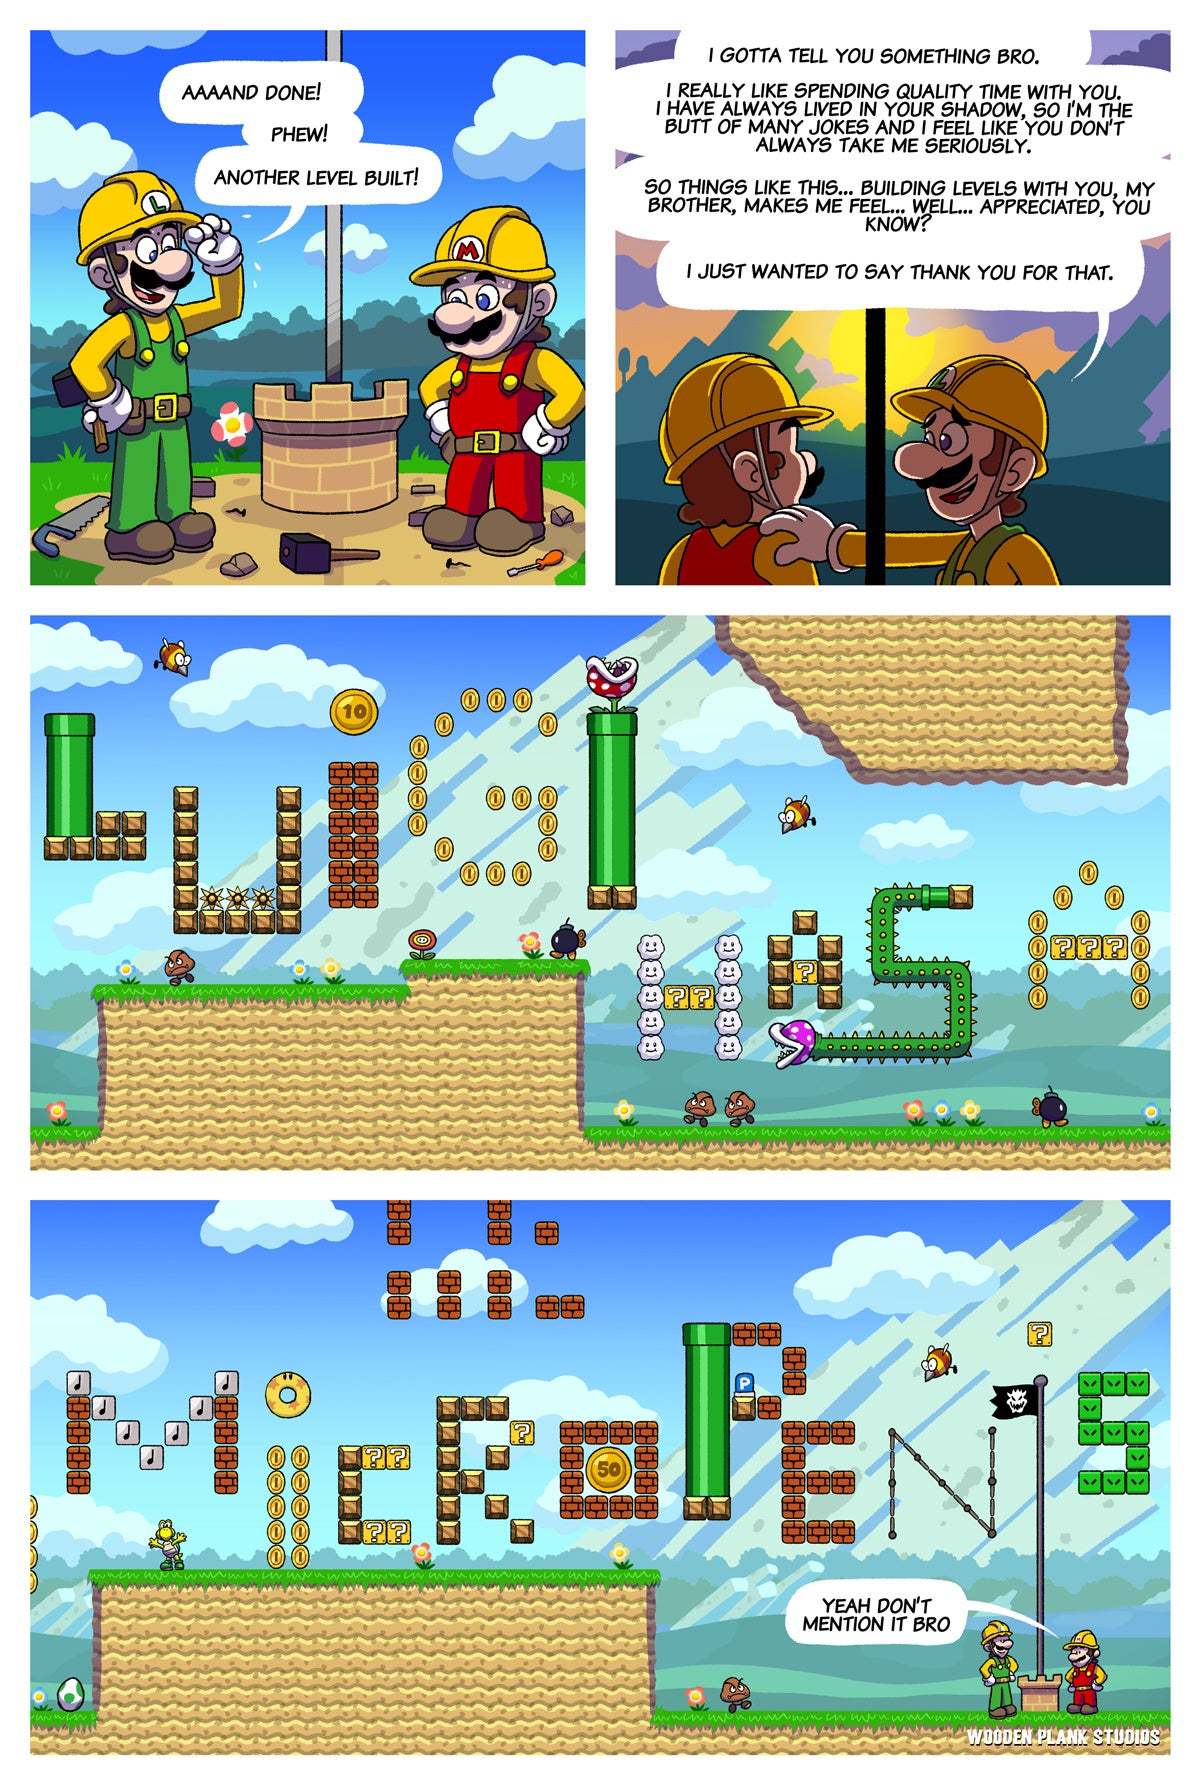 Luigi gets annoying in Mario maker 2 - meme